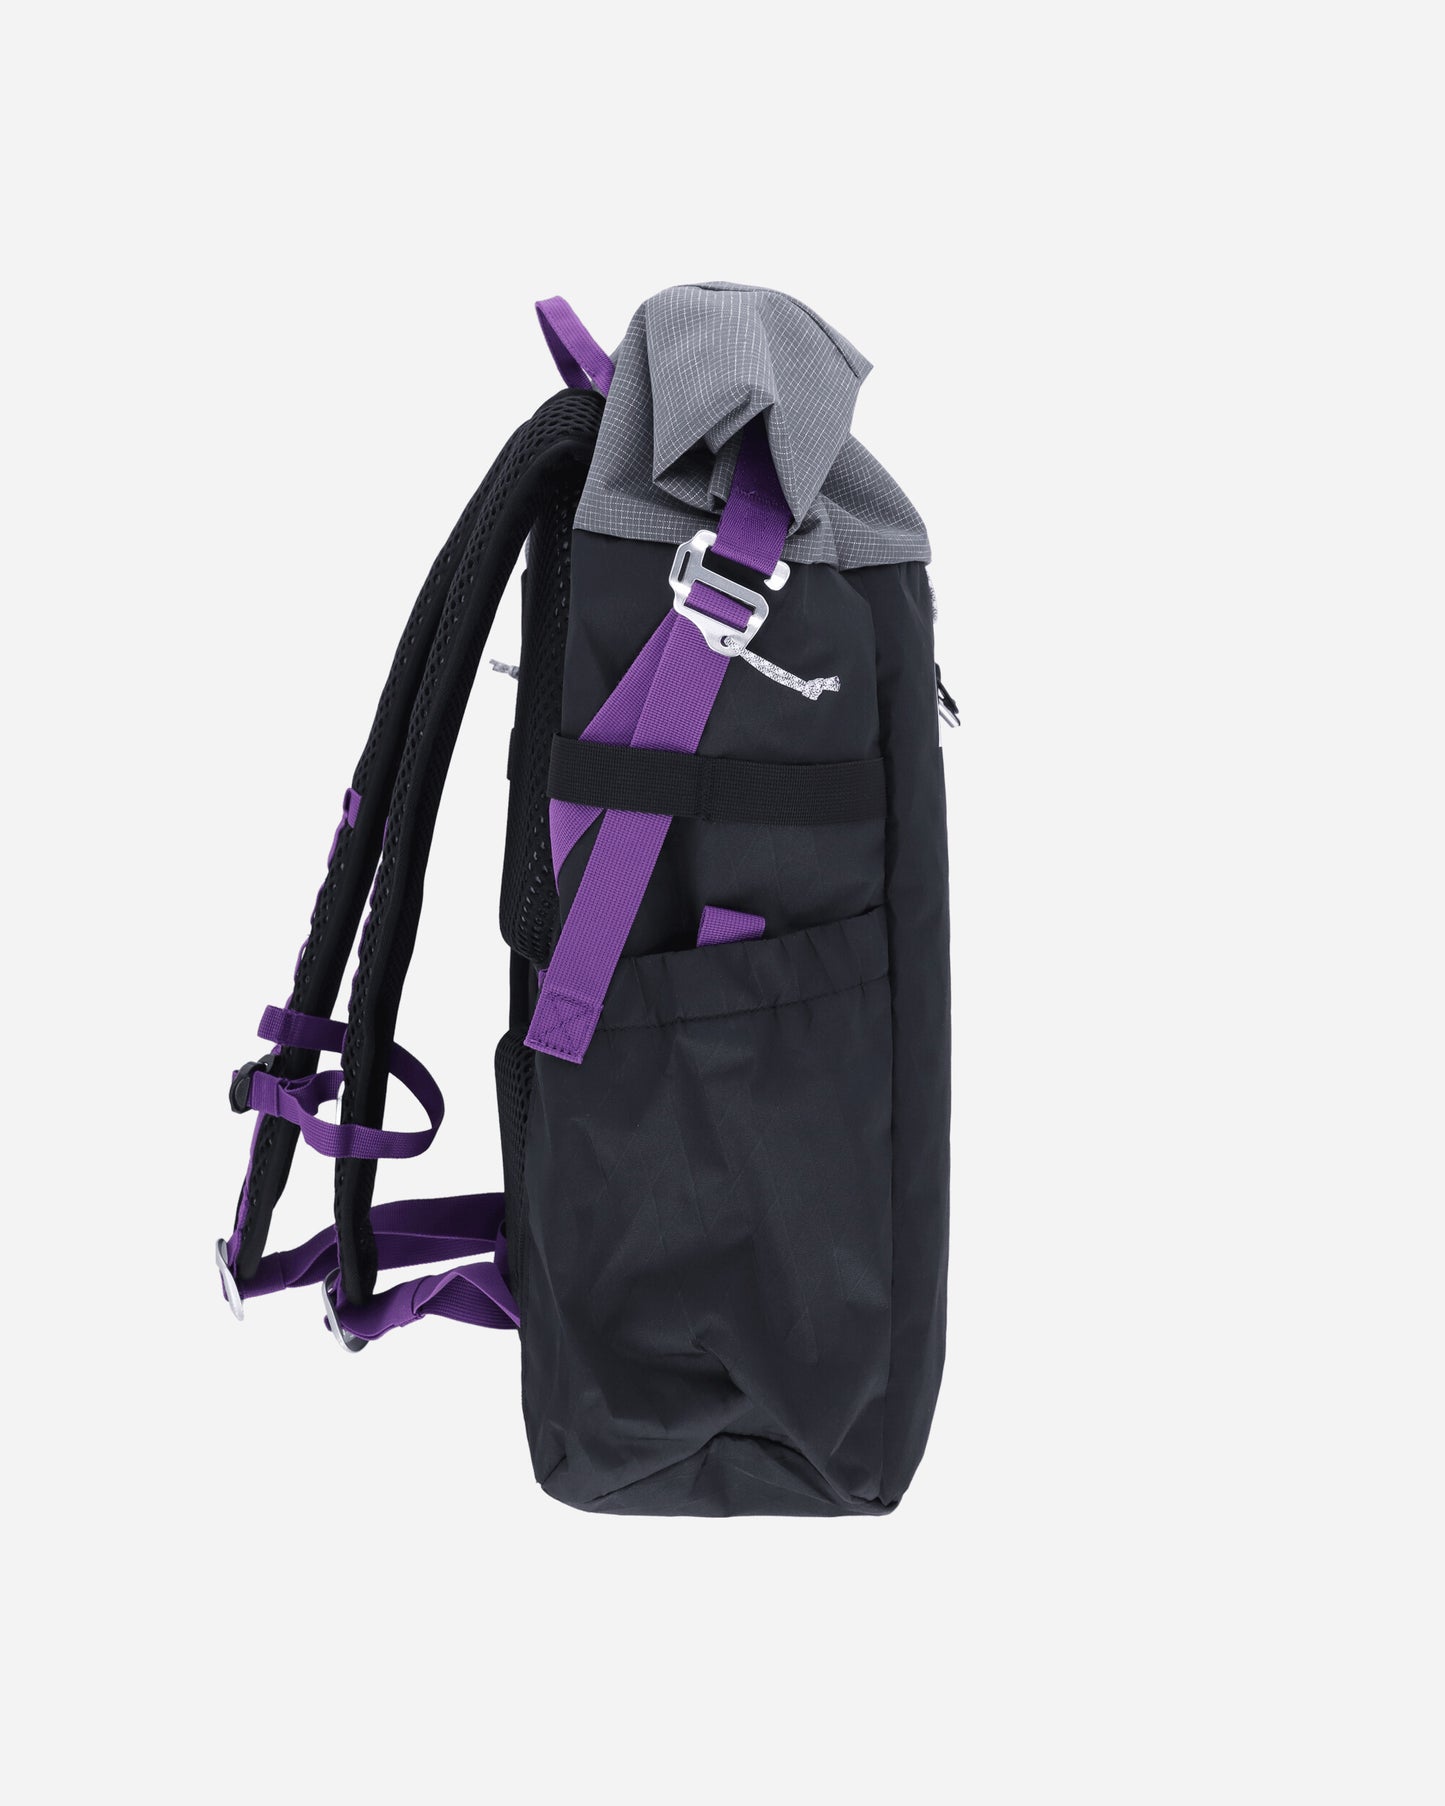 Nike Acg Aysen Bkpk Black/Cool Grey Bags and Backpacks Backpacks DV4054-010